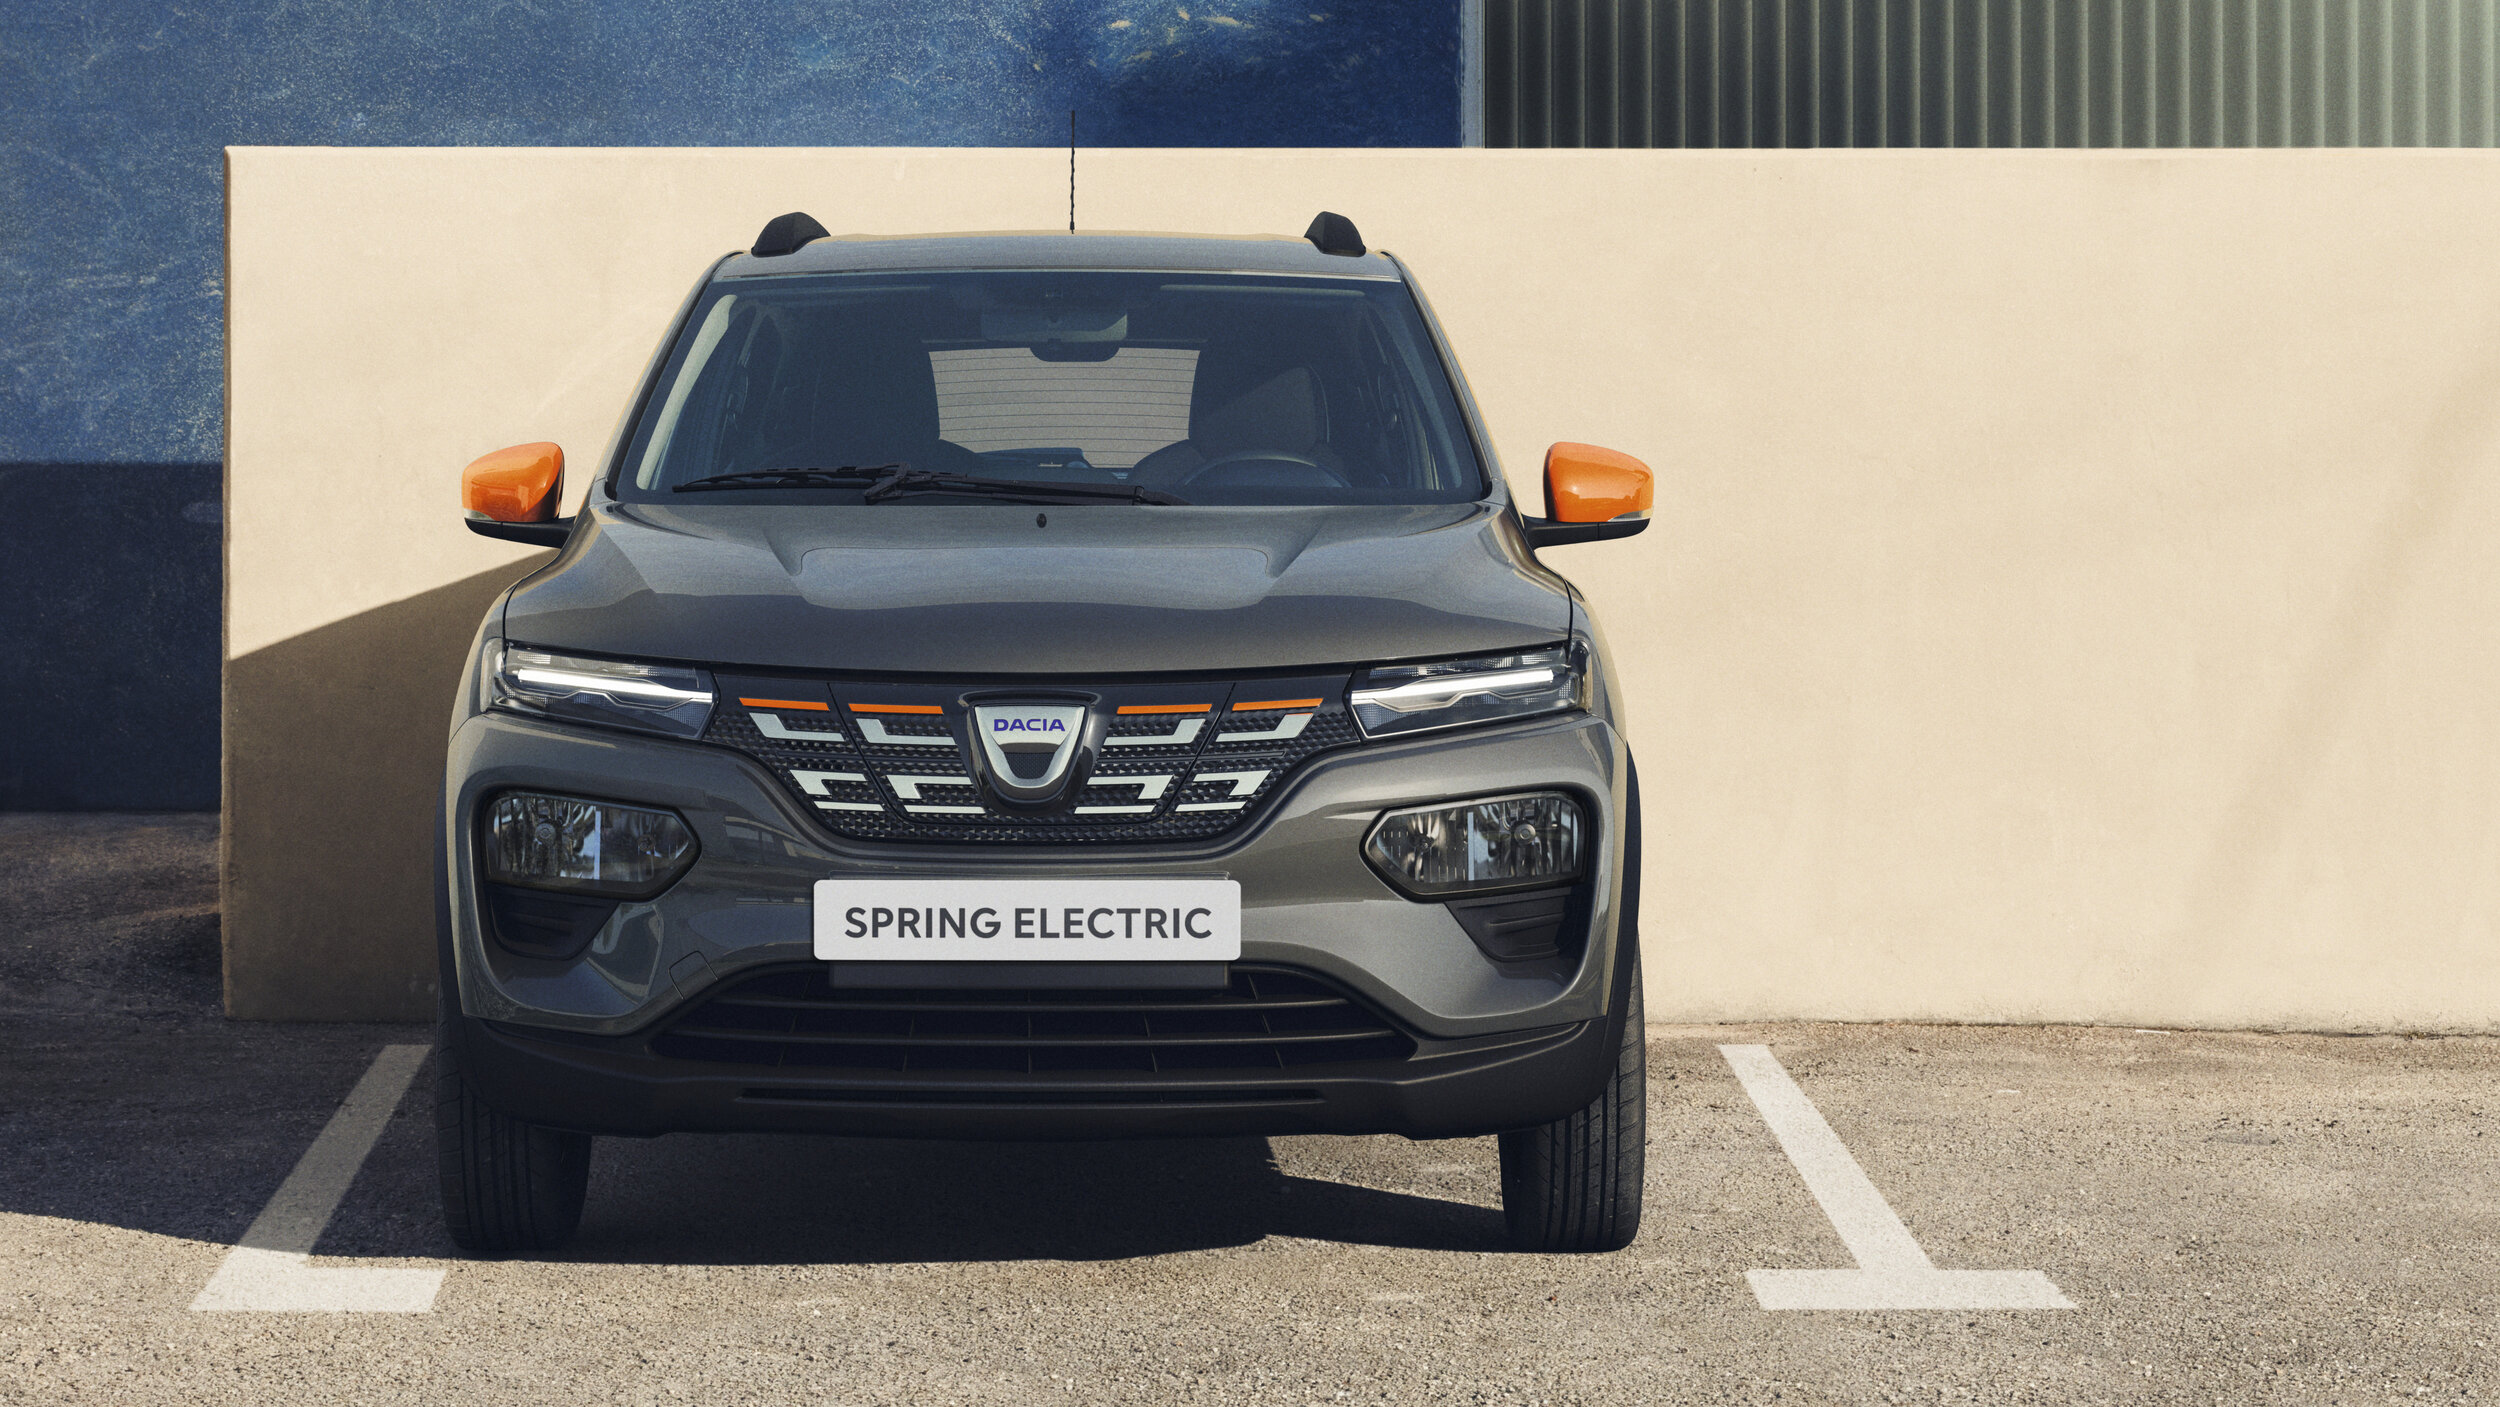 2020 - Dacia SPRING (5).jpg